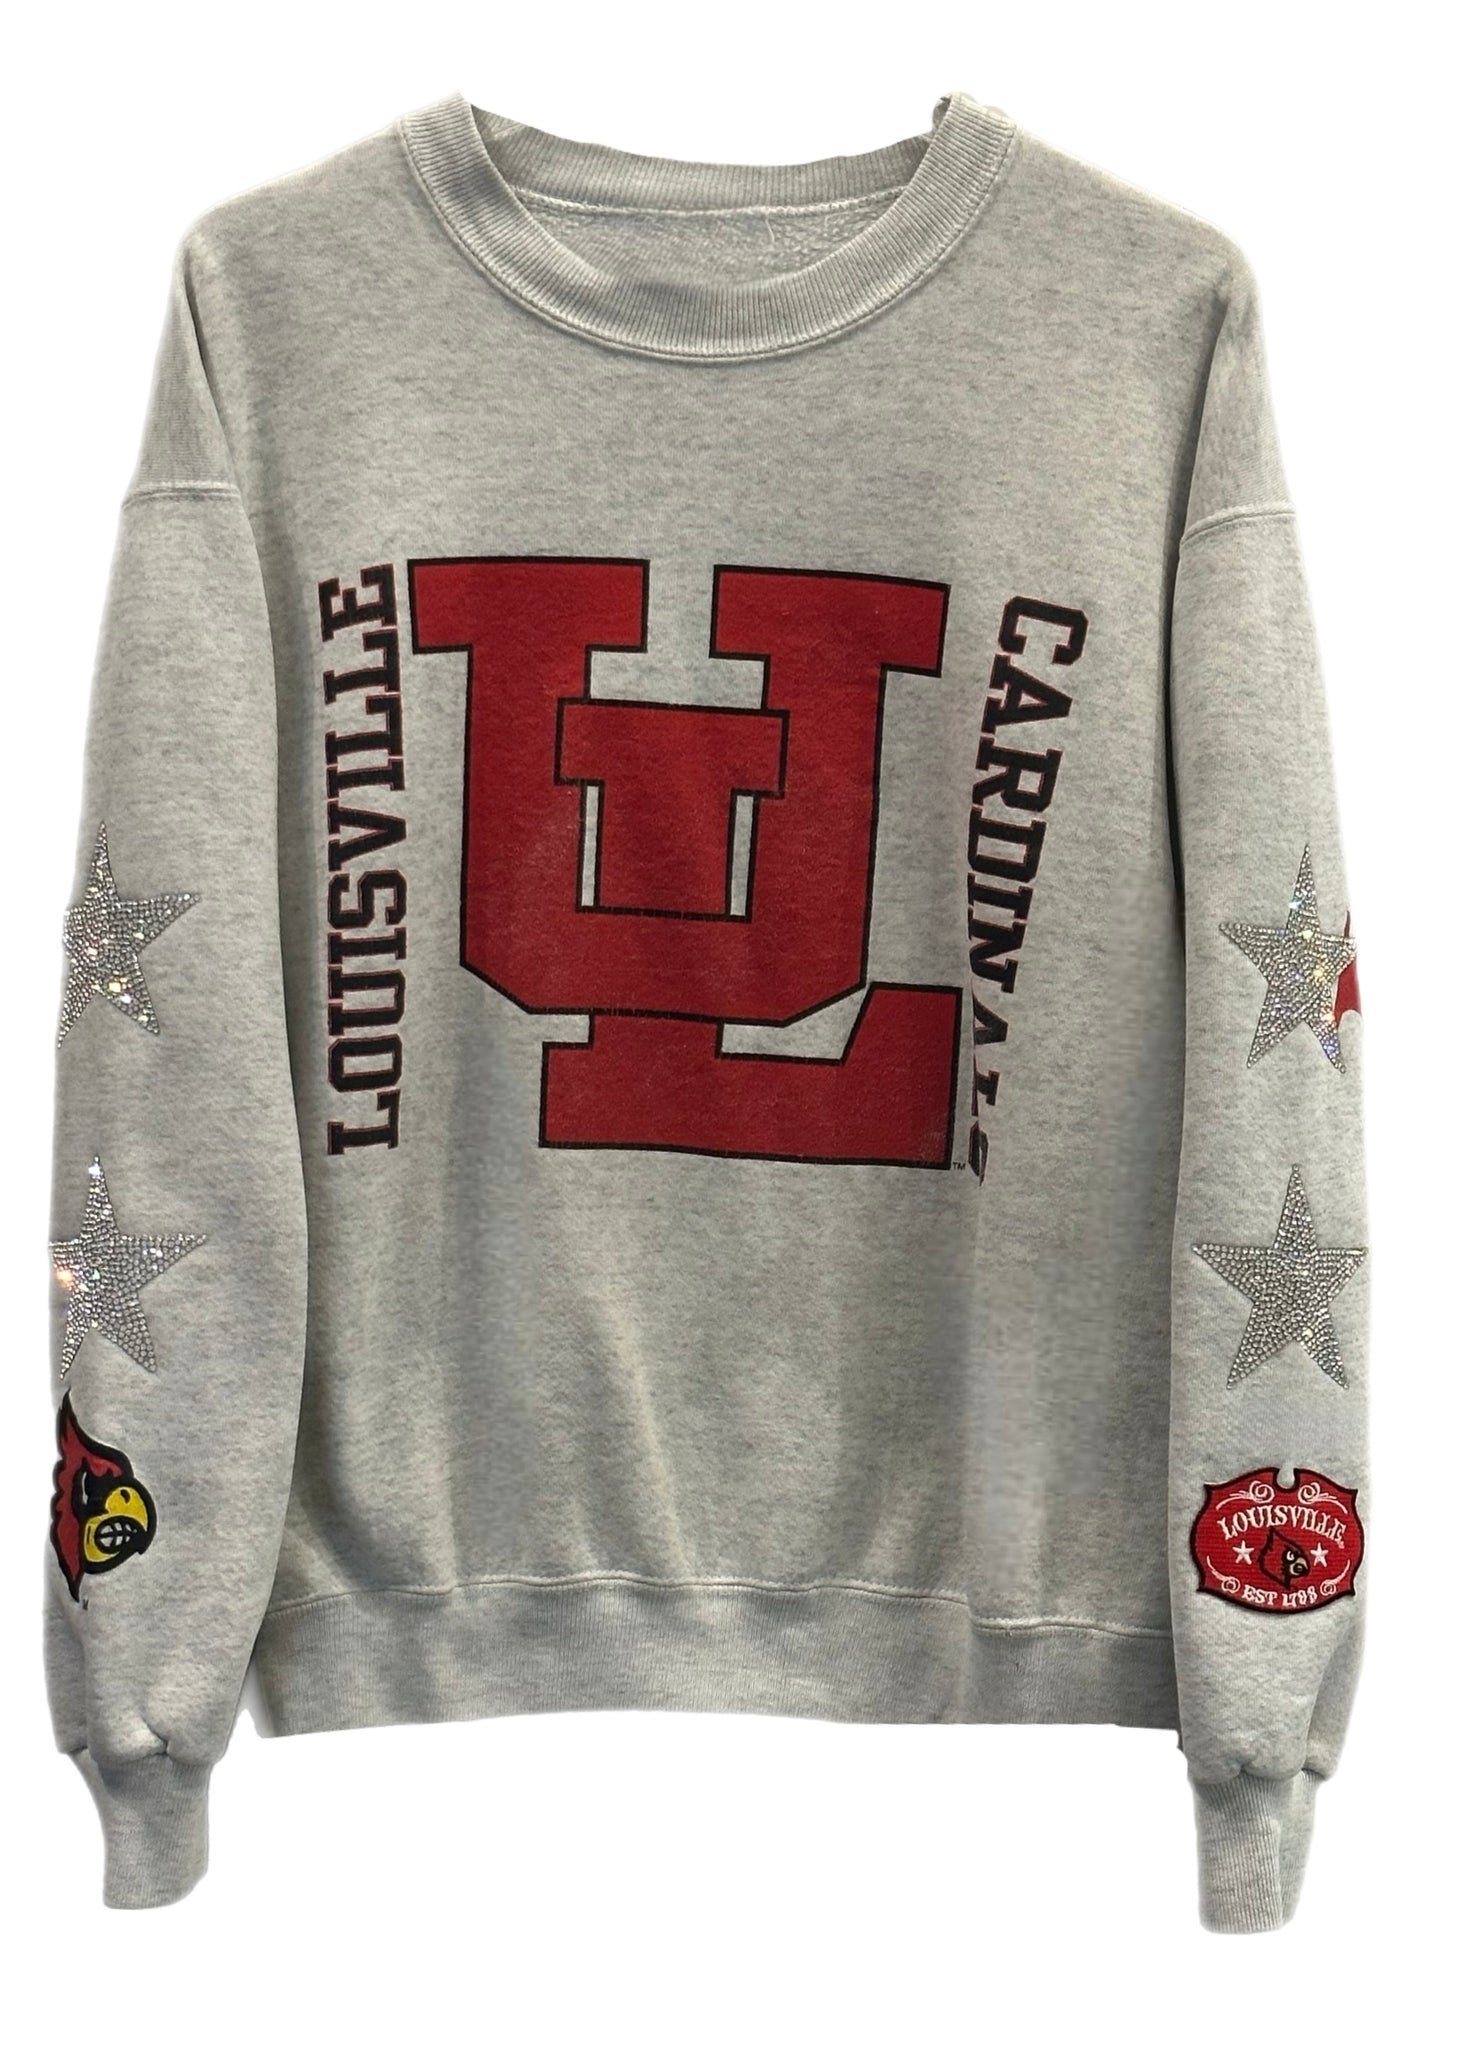 Vintage Louisville Cardinals Logo Sweatshirt, University of